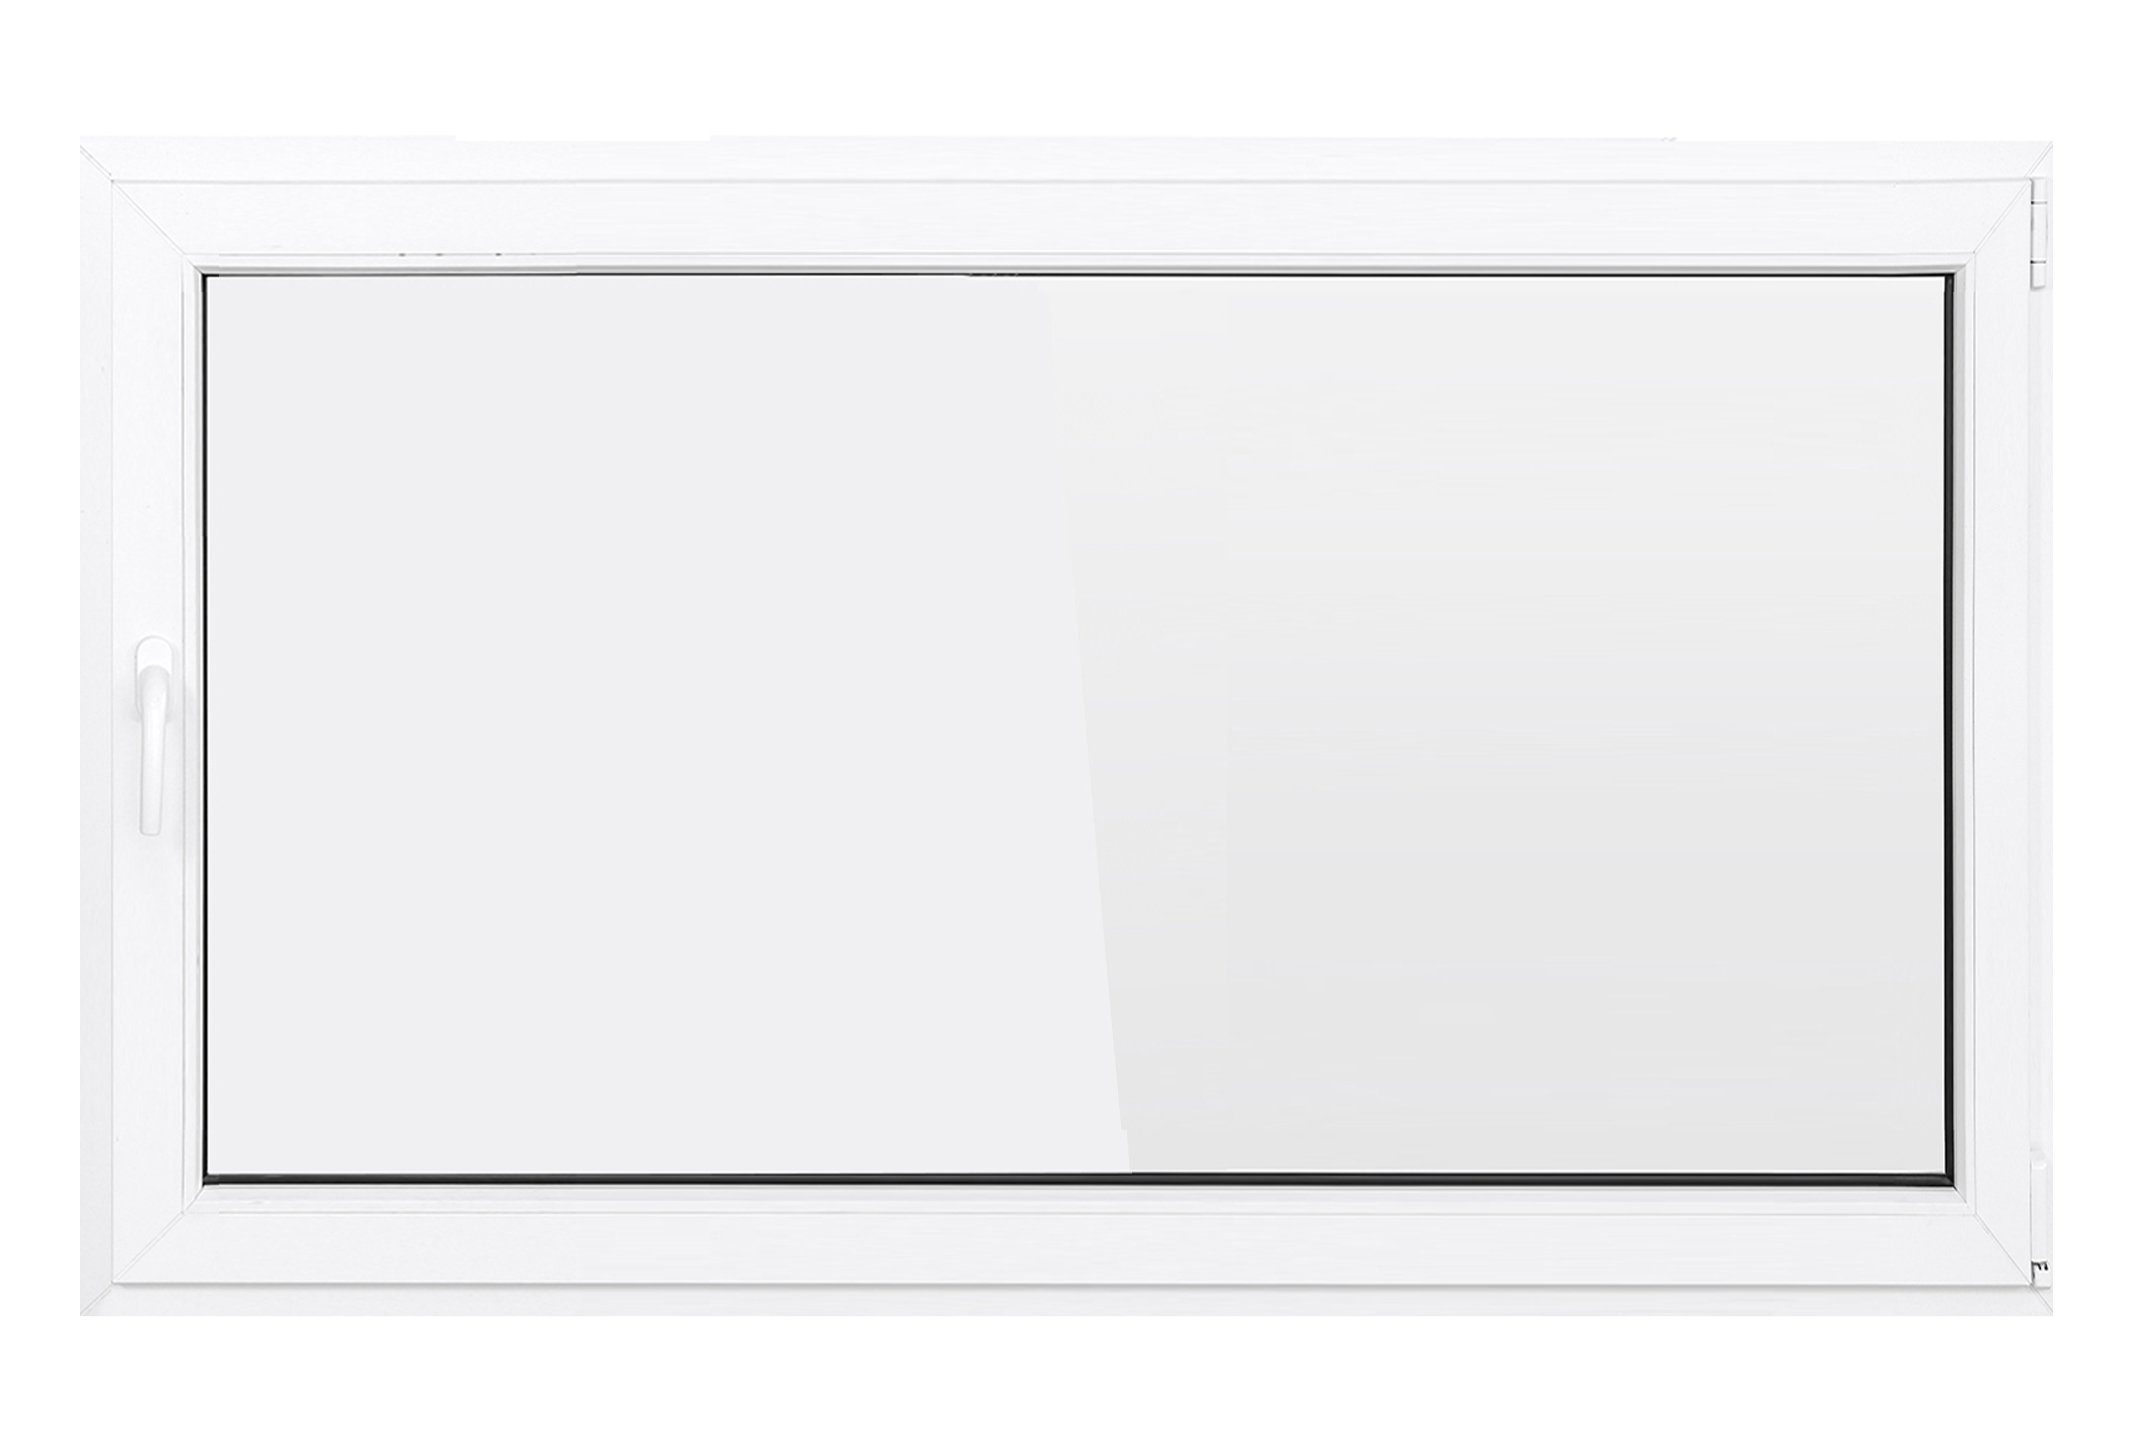 SN DECO GROUP Kellerfenster 1 Flügel 1000x600 Dreh-Kipp 2-fach Verglasung weiß 70 mm Profil, (Set), RC2 Sicherheitsbeschlag, Hochwertiges 5-Kammer-Profil